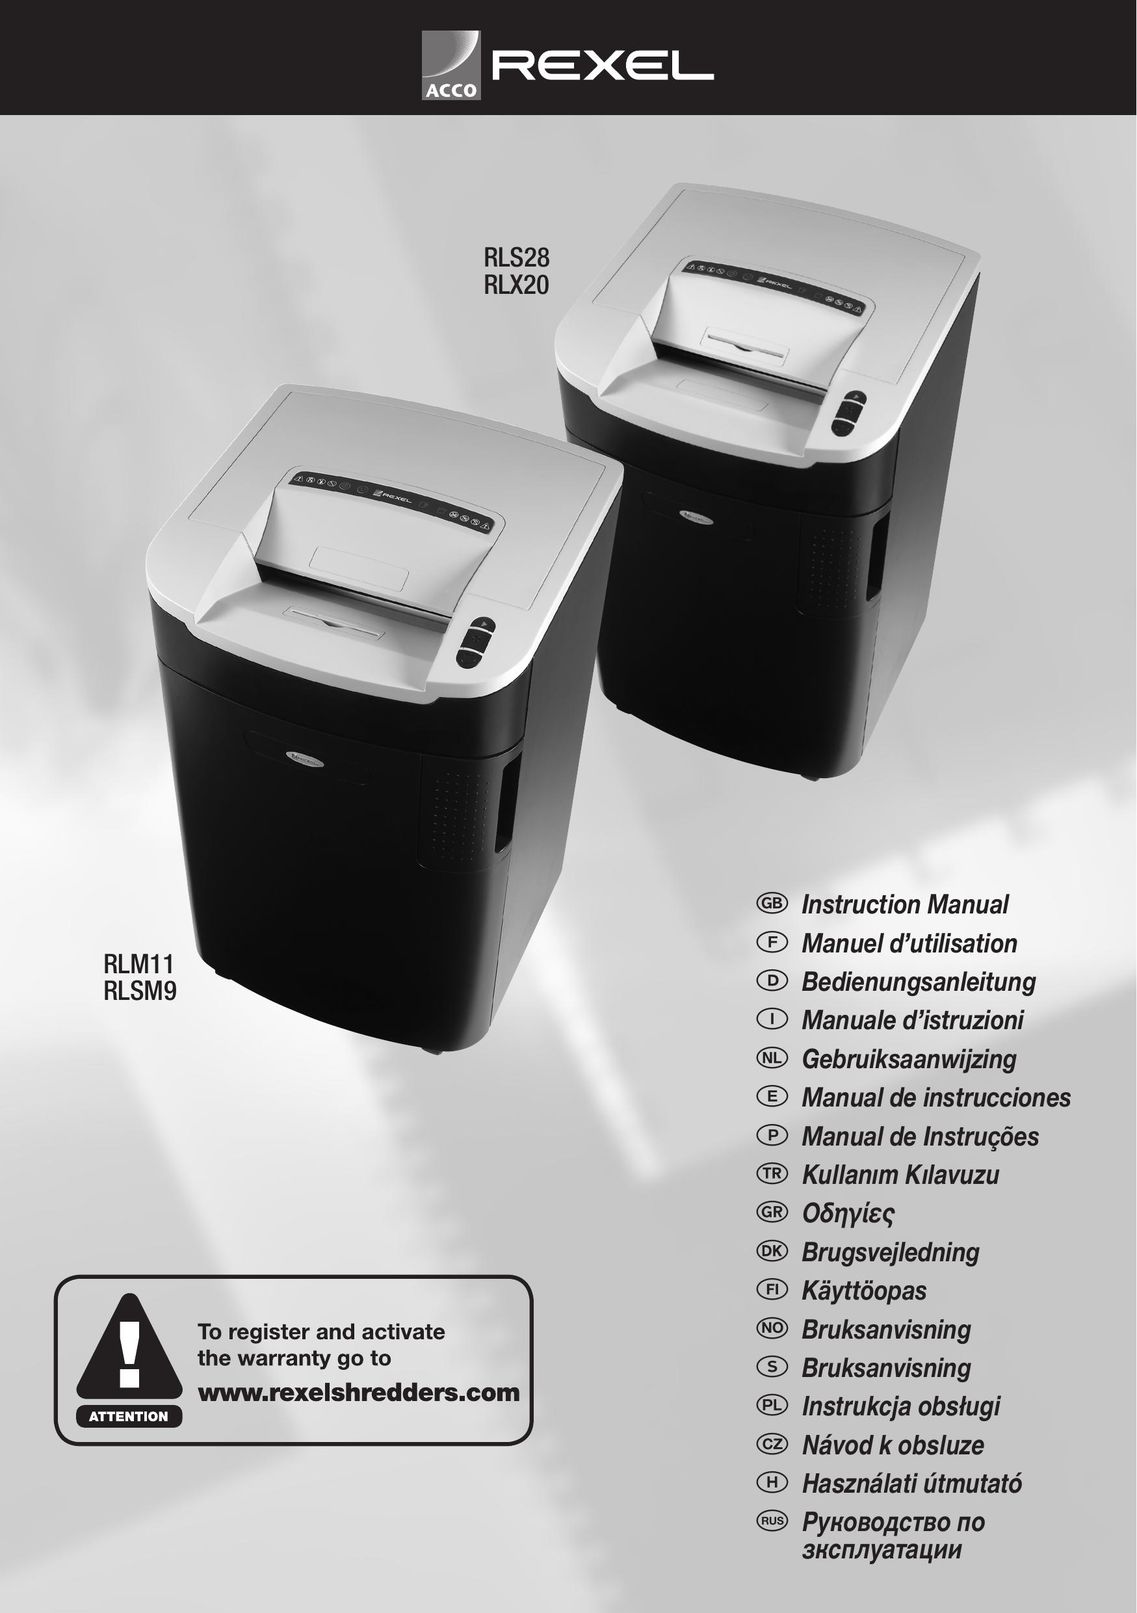 ACCO Brands RLM11 Paper Shredder User Manual